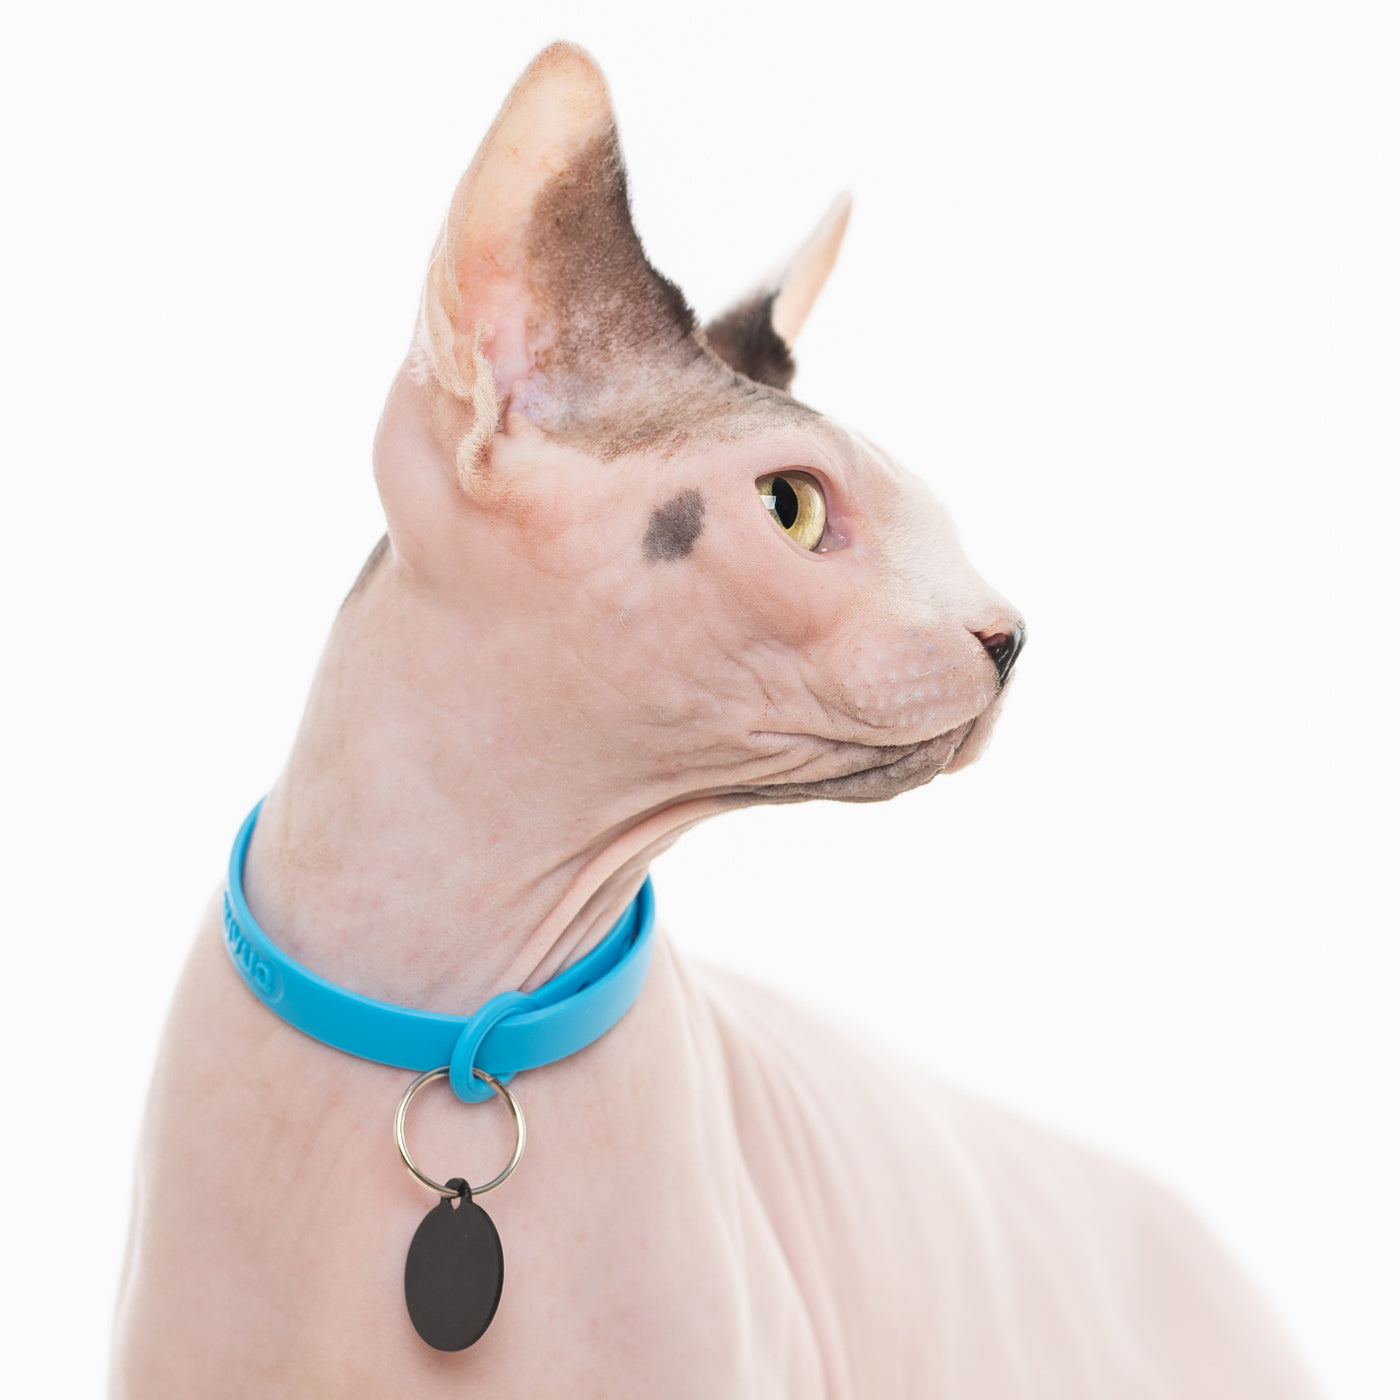 Sphynx cat wearing blue collar